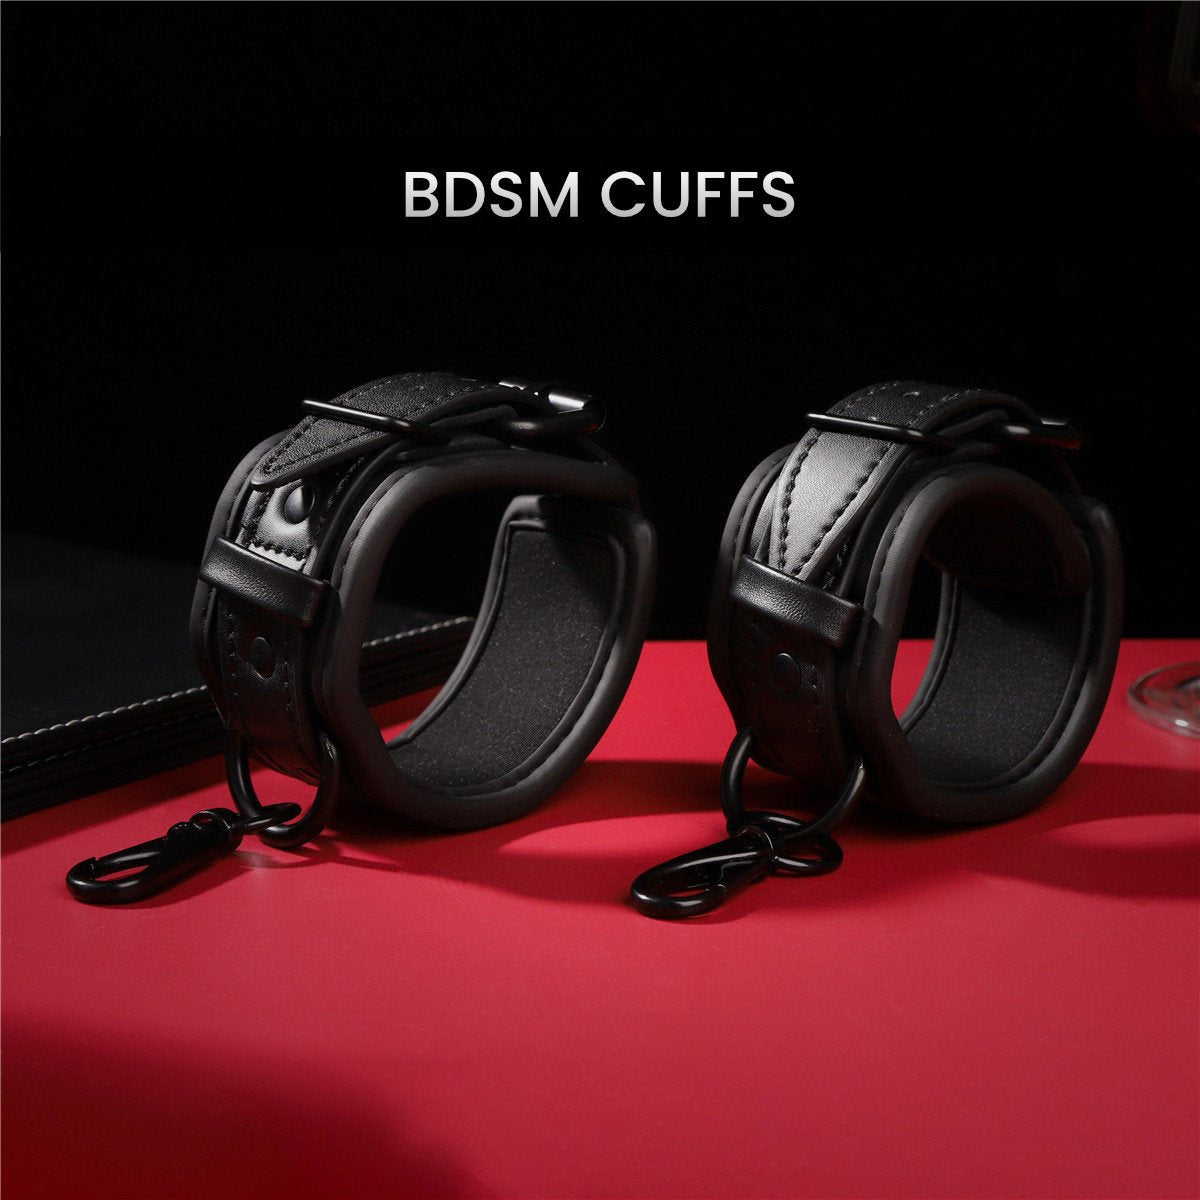 Dominate Me – PU Leather Cuffs | FRISKY BUSINESS SG